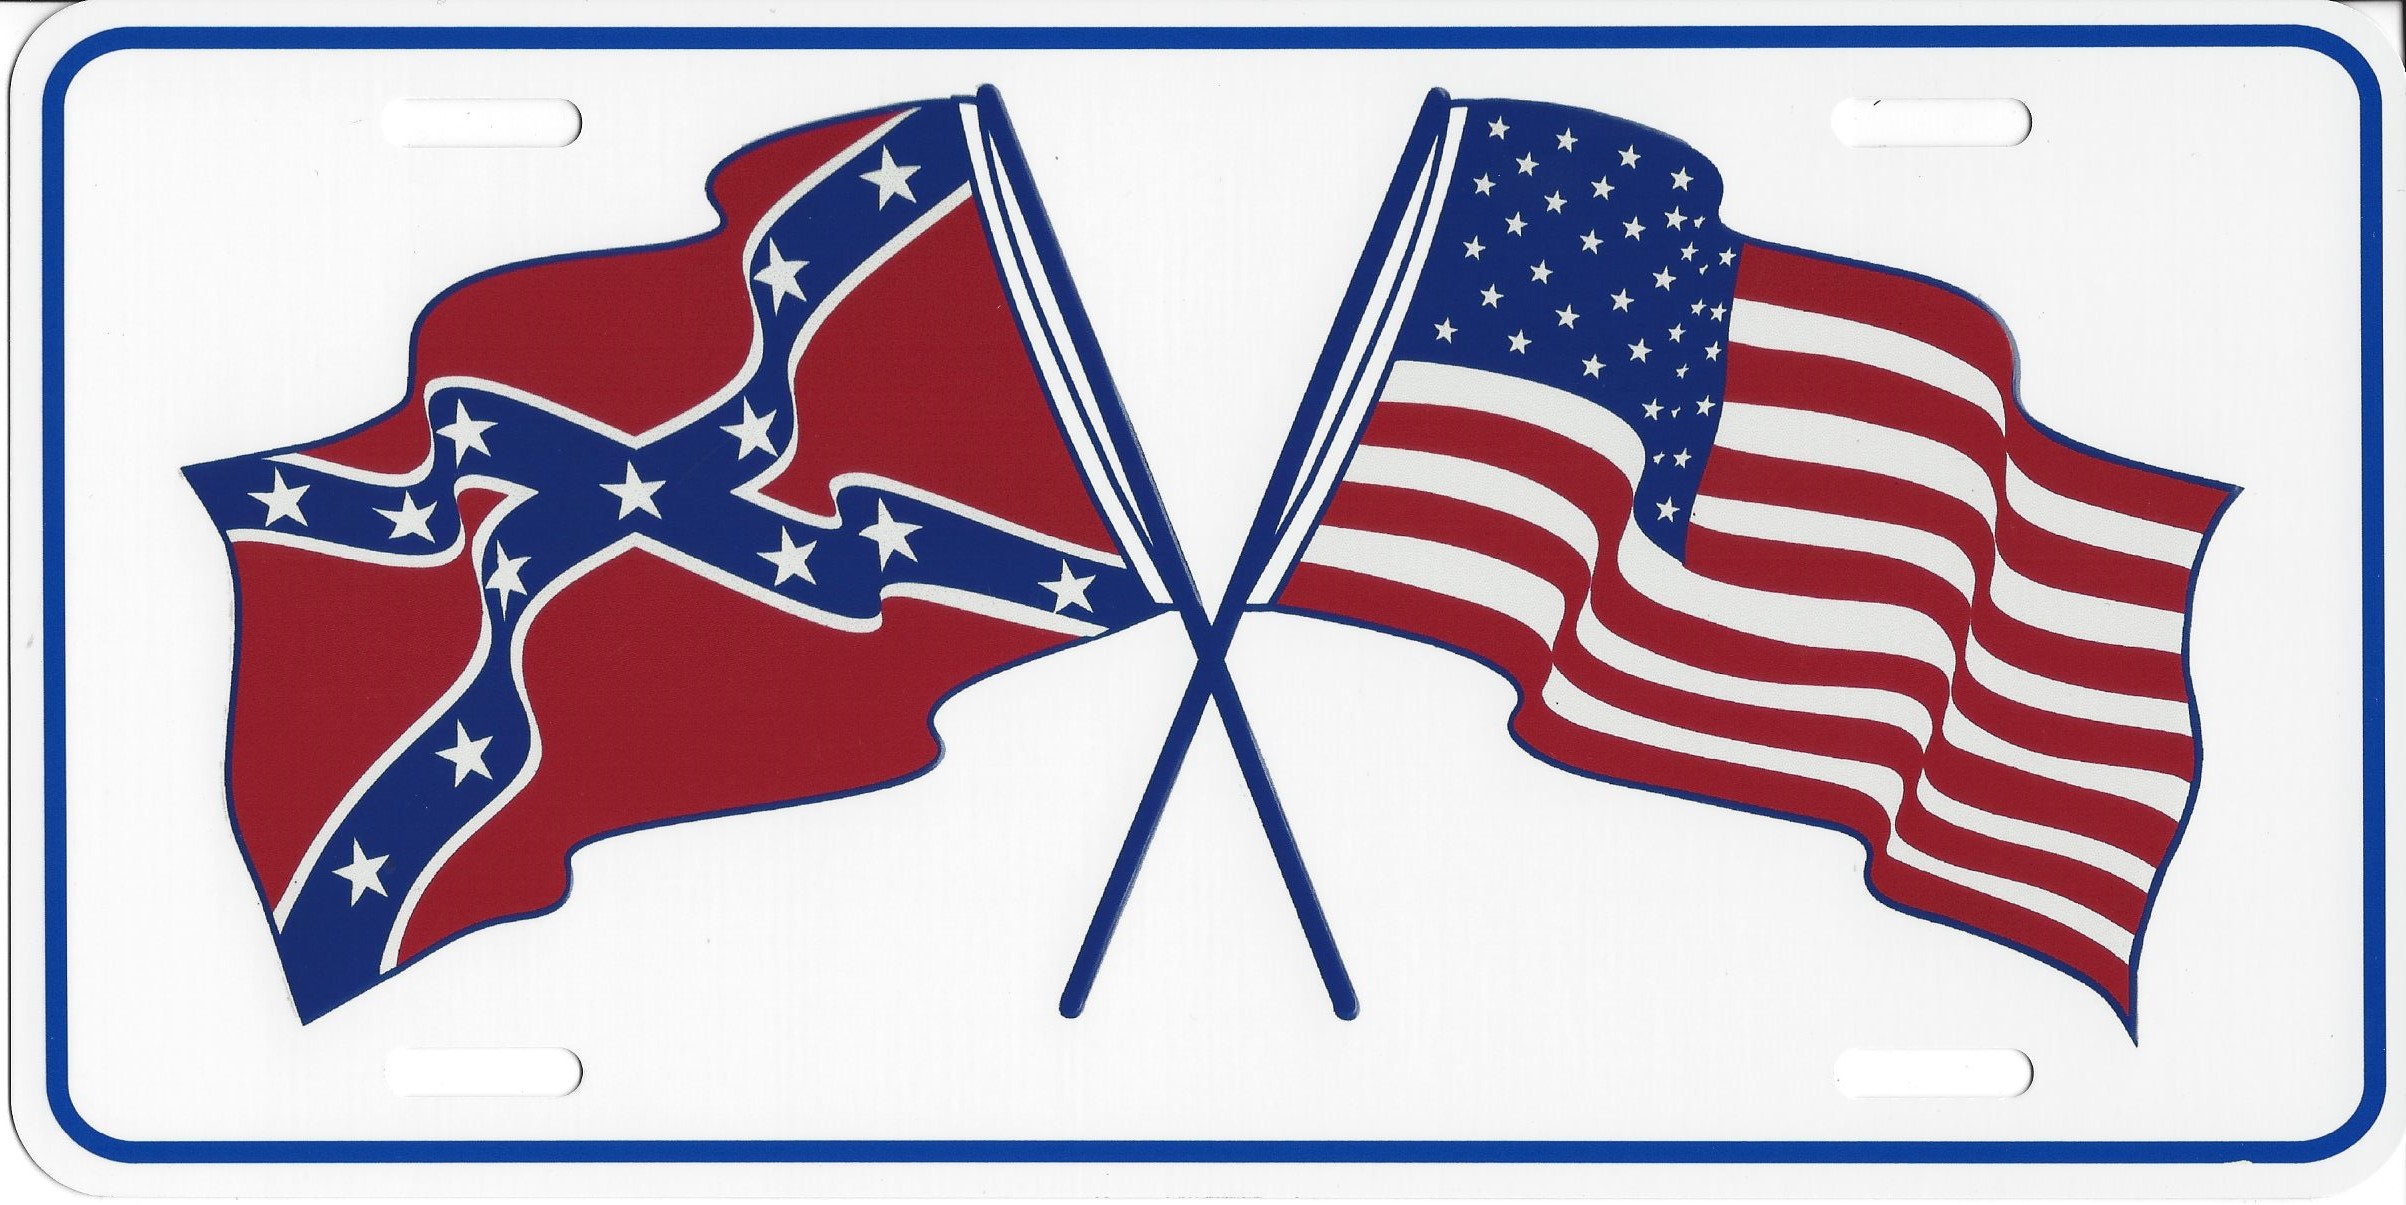 U.S.A. / REBEL Flag Crossed Photo License Plate 